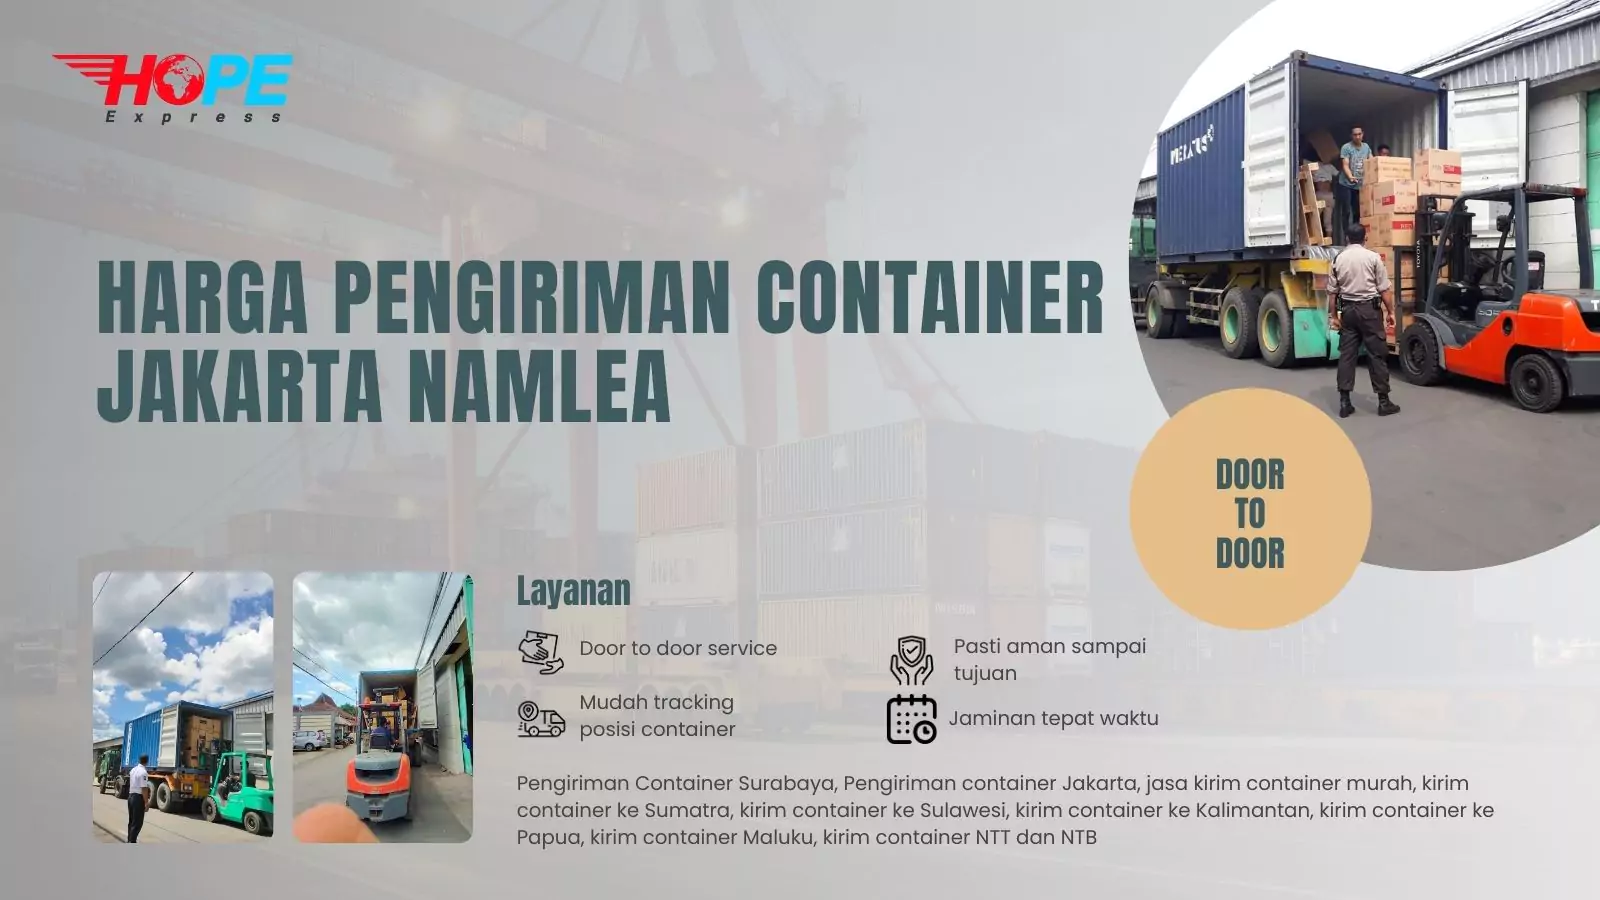 Harga Pengiriman Container Jakarta Namlea